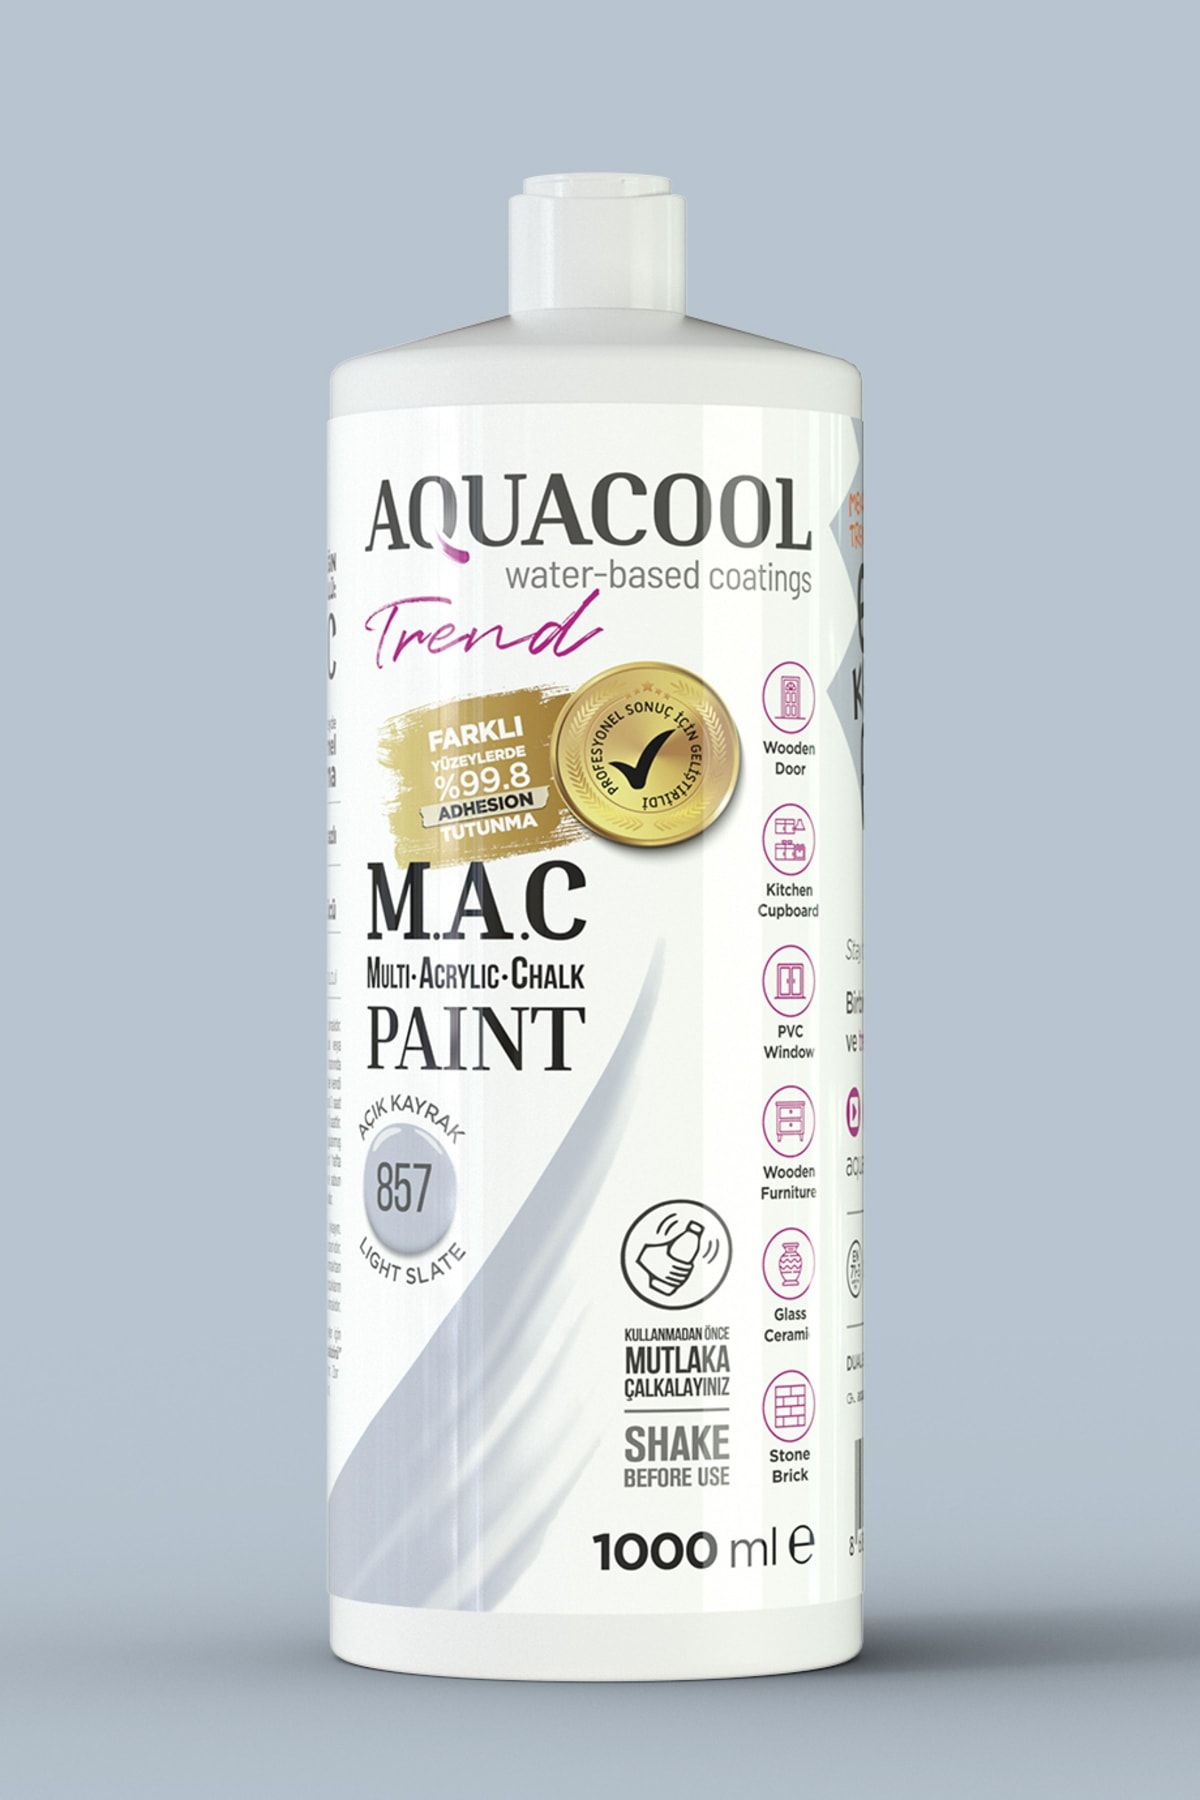 AQUA COOL Aquacool Trend Mac Boya Açık Kayrak 857 - 1000 Ml